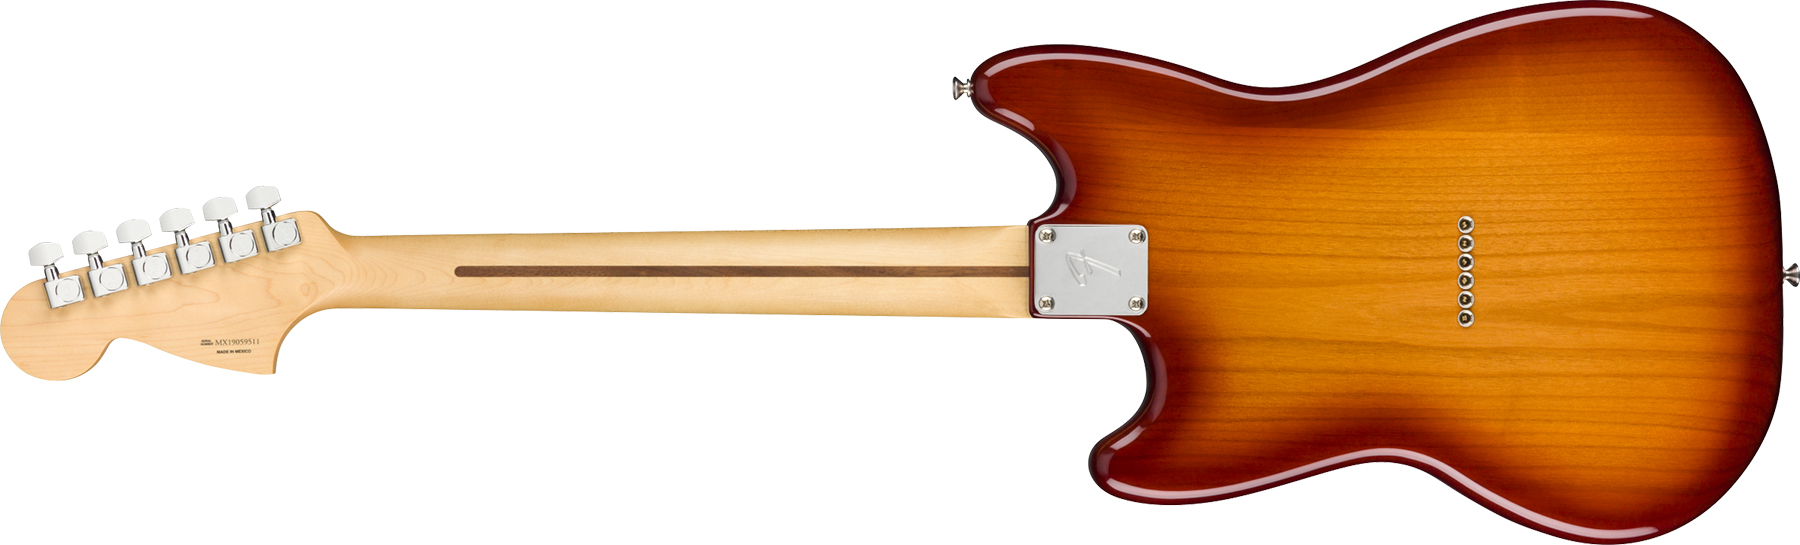 Fender Mustang Player Mex Ht 2s Mn - Sienna Sunburst - Retro-Rock-E-Gitarre - Variation 1